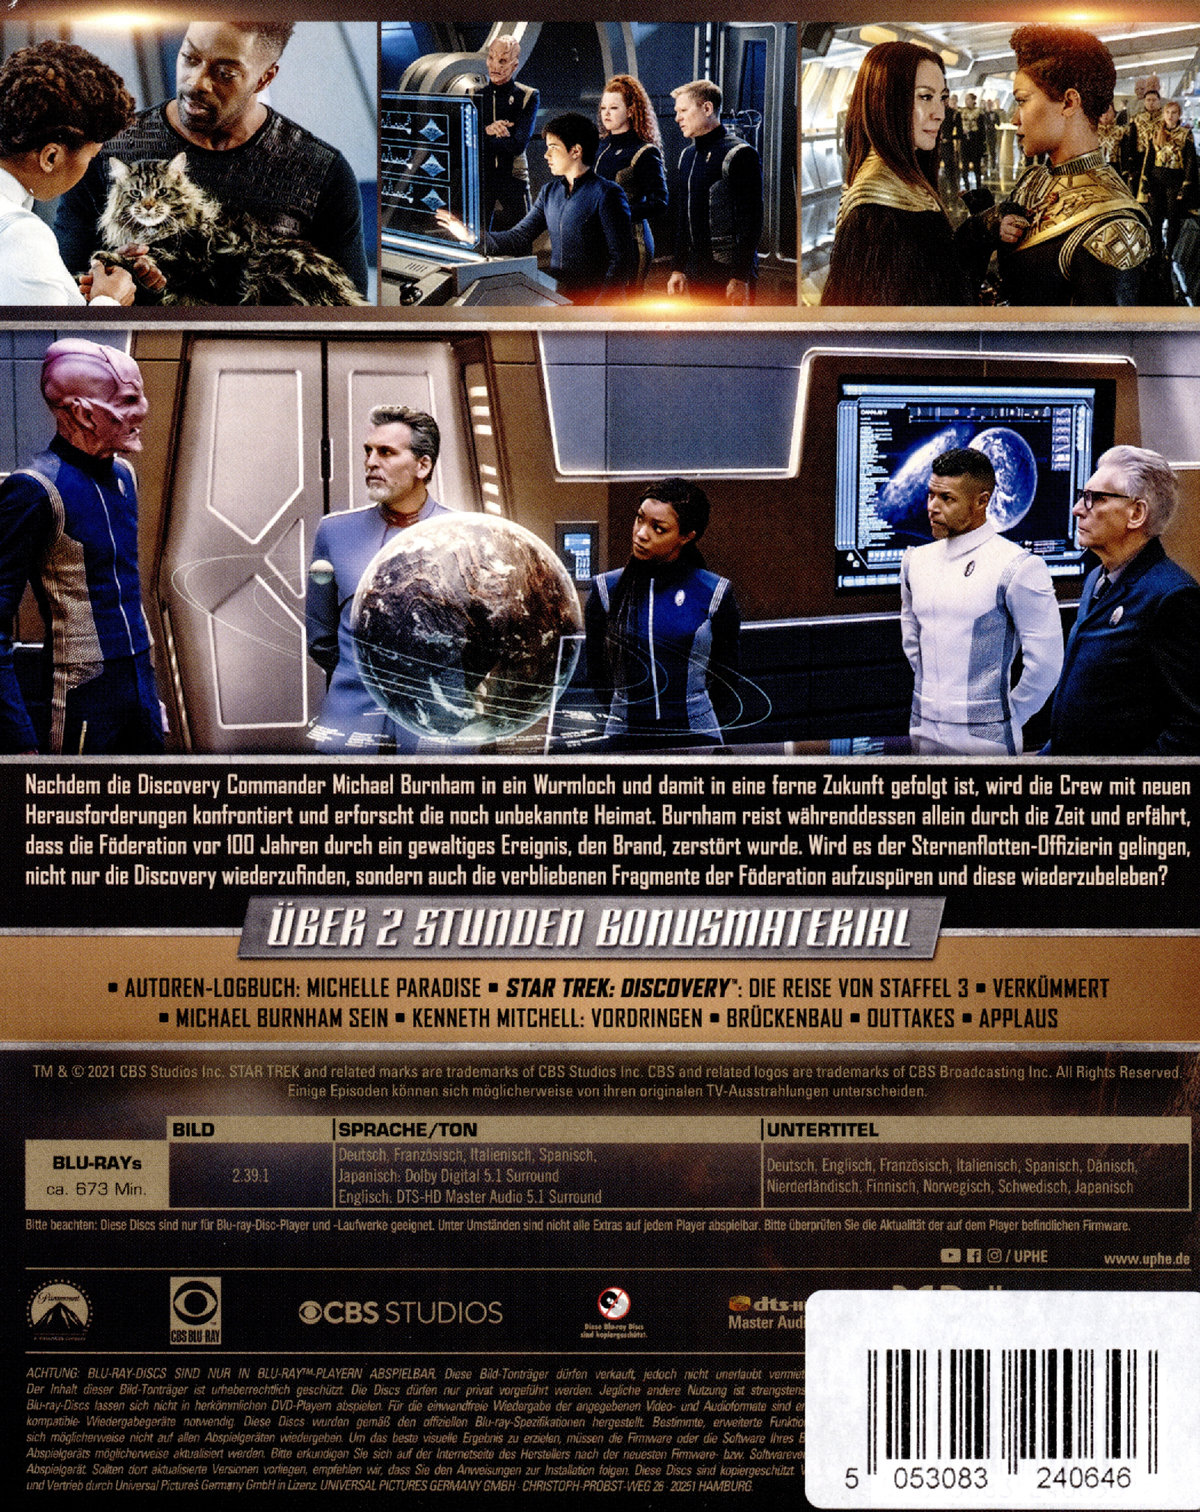 Star Trek: Discovery - Staffel 3 (blu-ray)